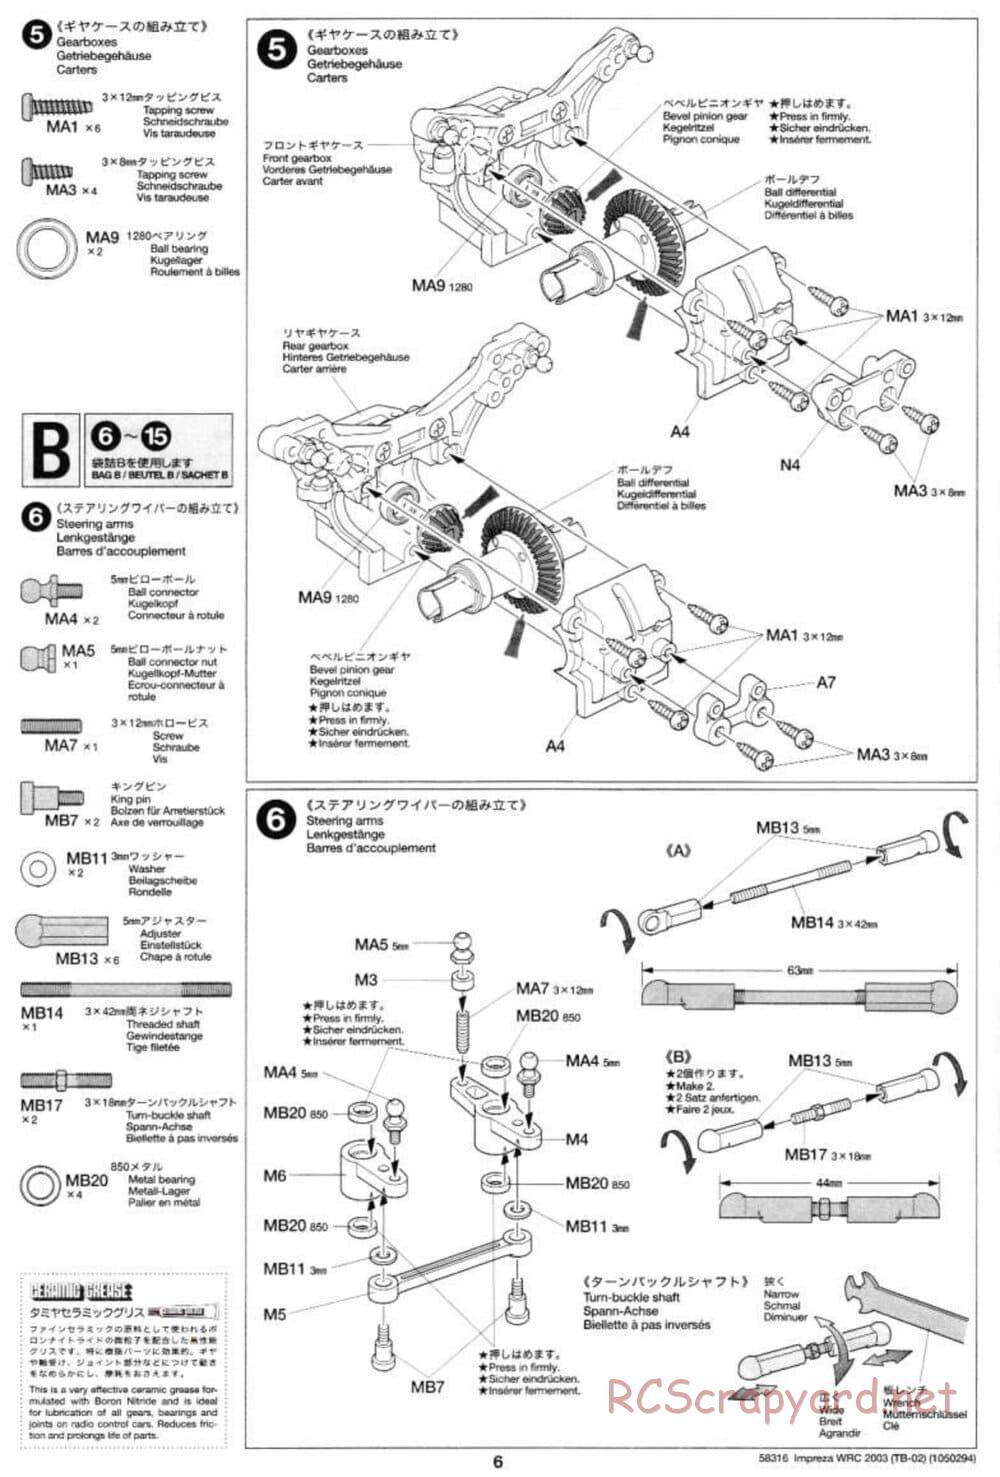 Tamiya - Subaru Impreza WRC 2003 - TB-02 Chassis - Manual - Page 6